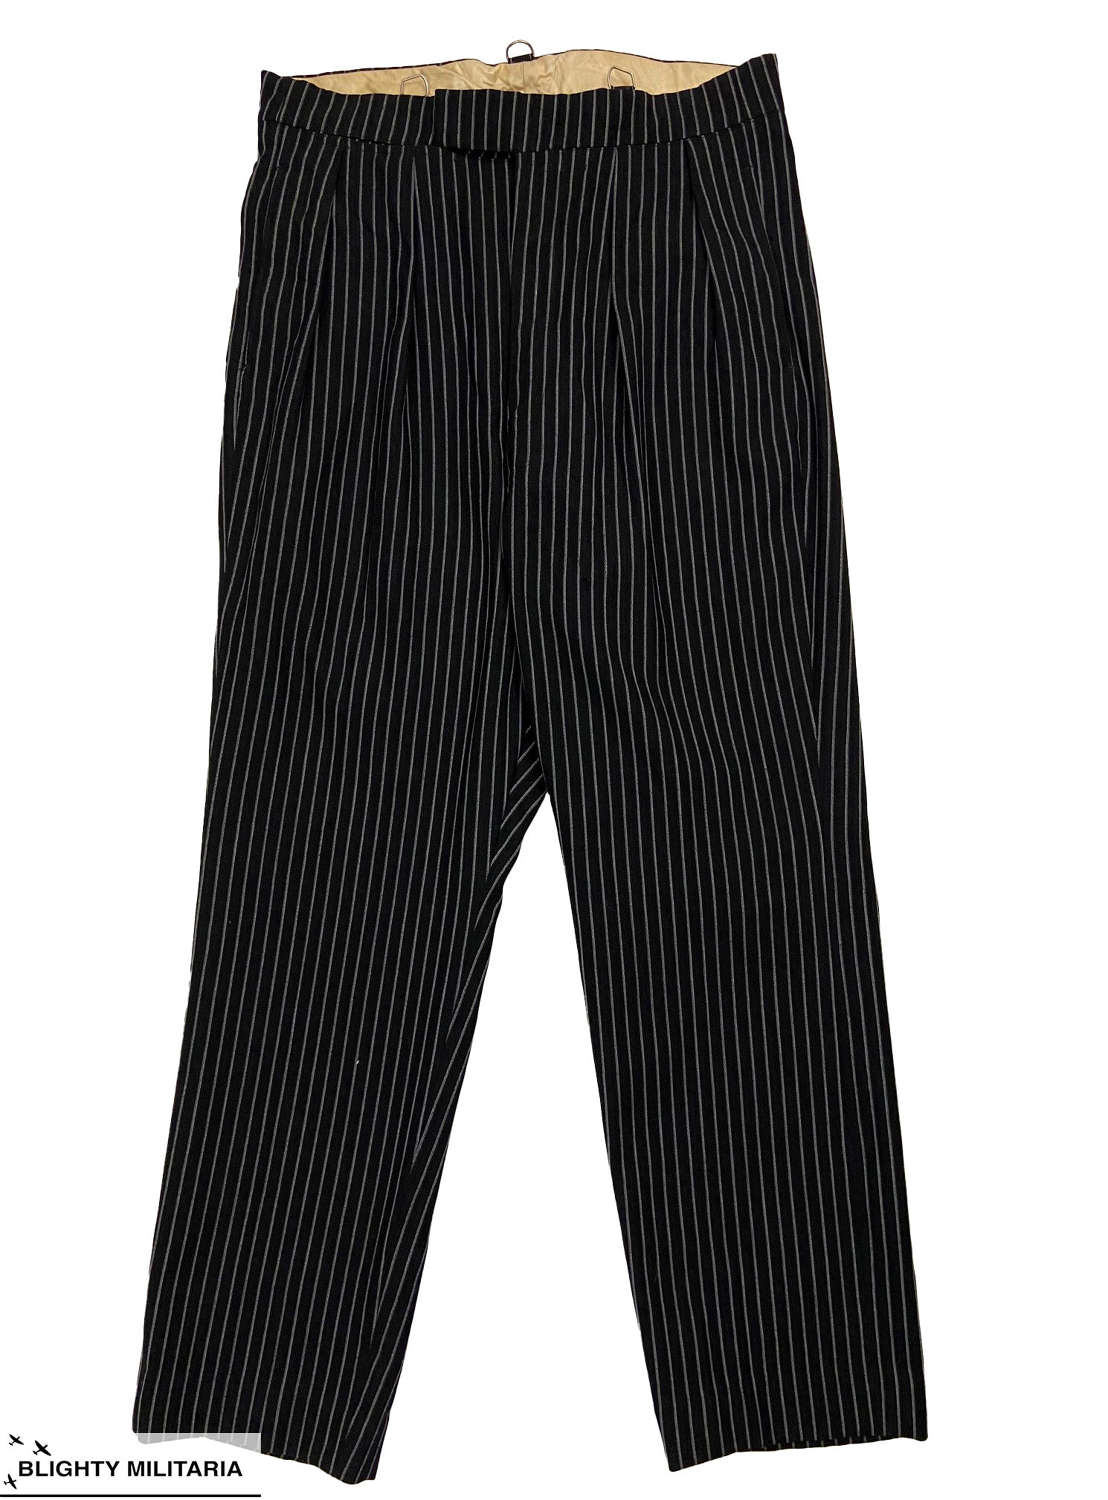 Original 1950s Men's Chalk Stripe Trousers - 34x30